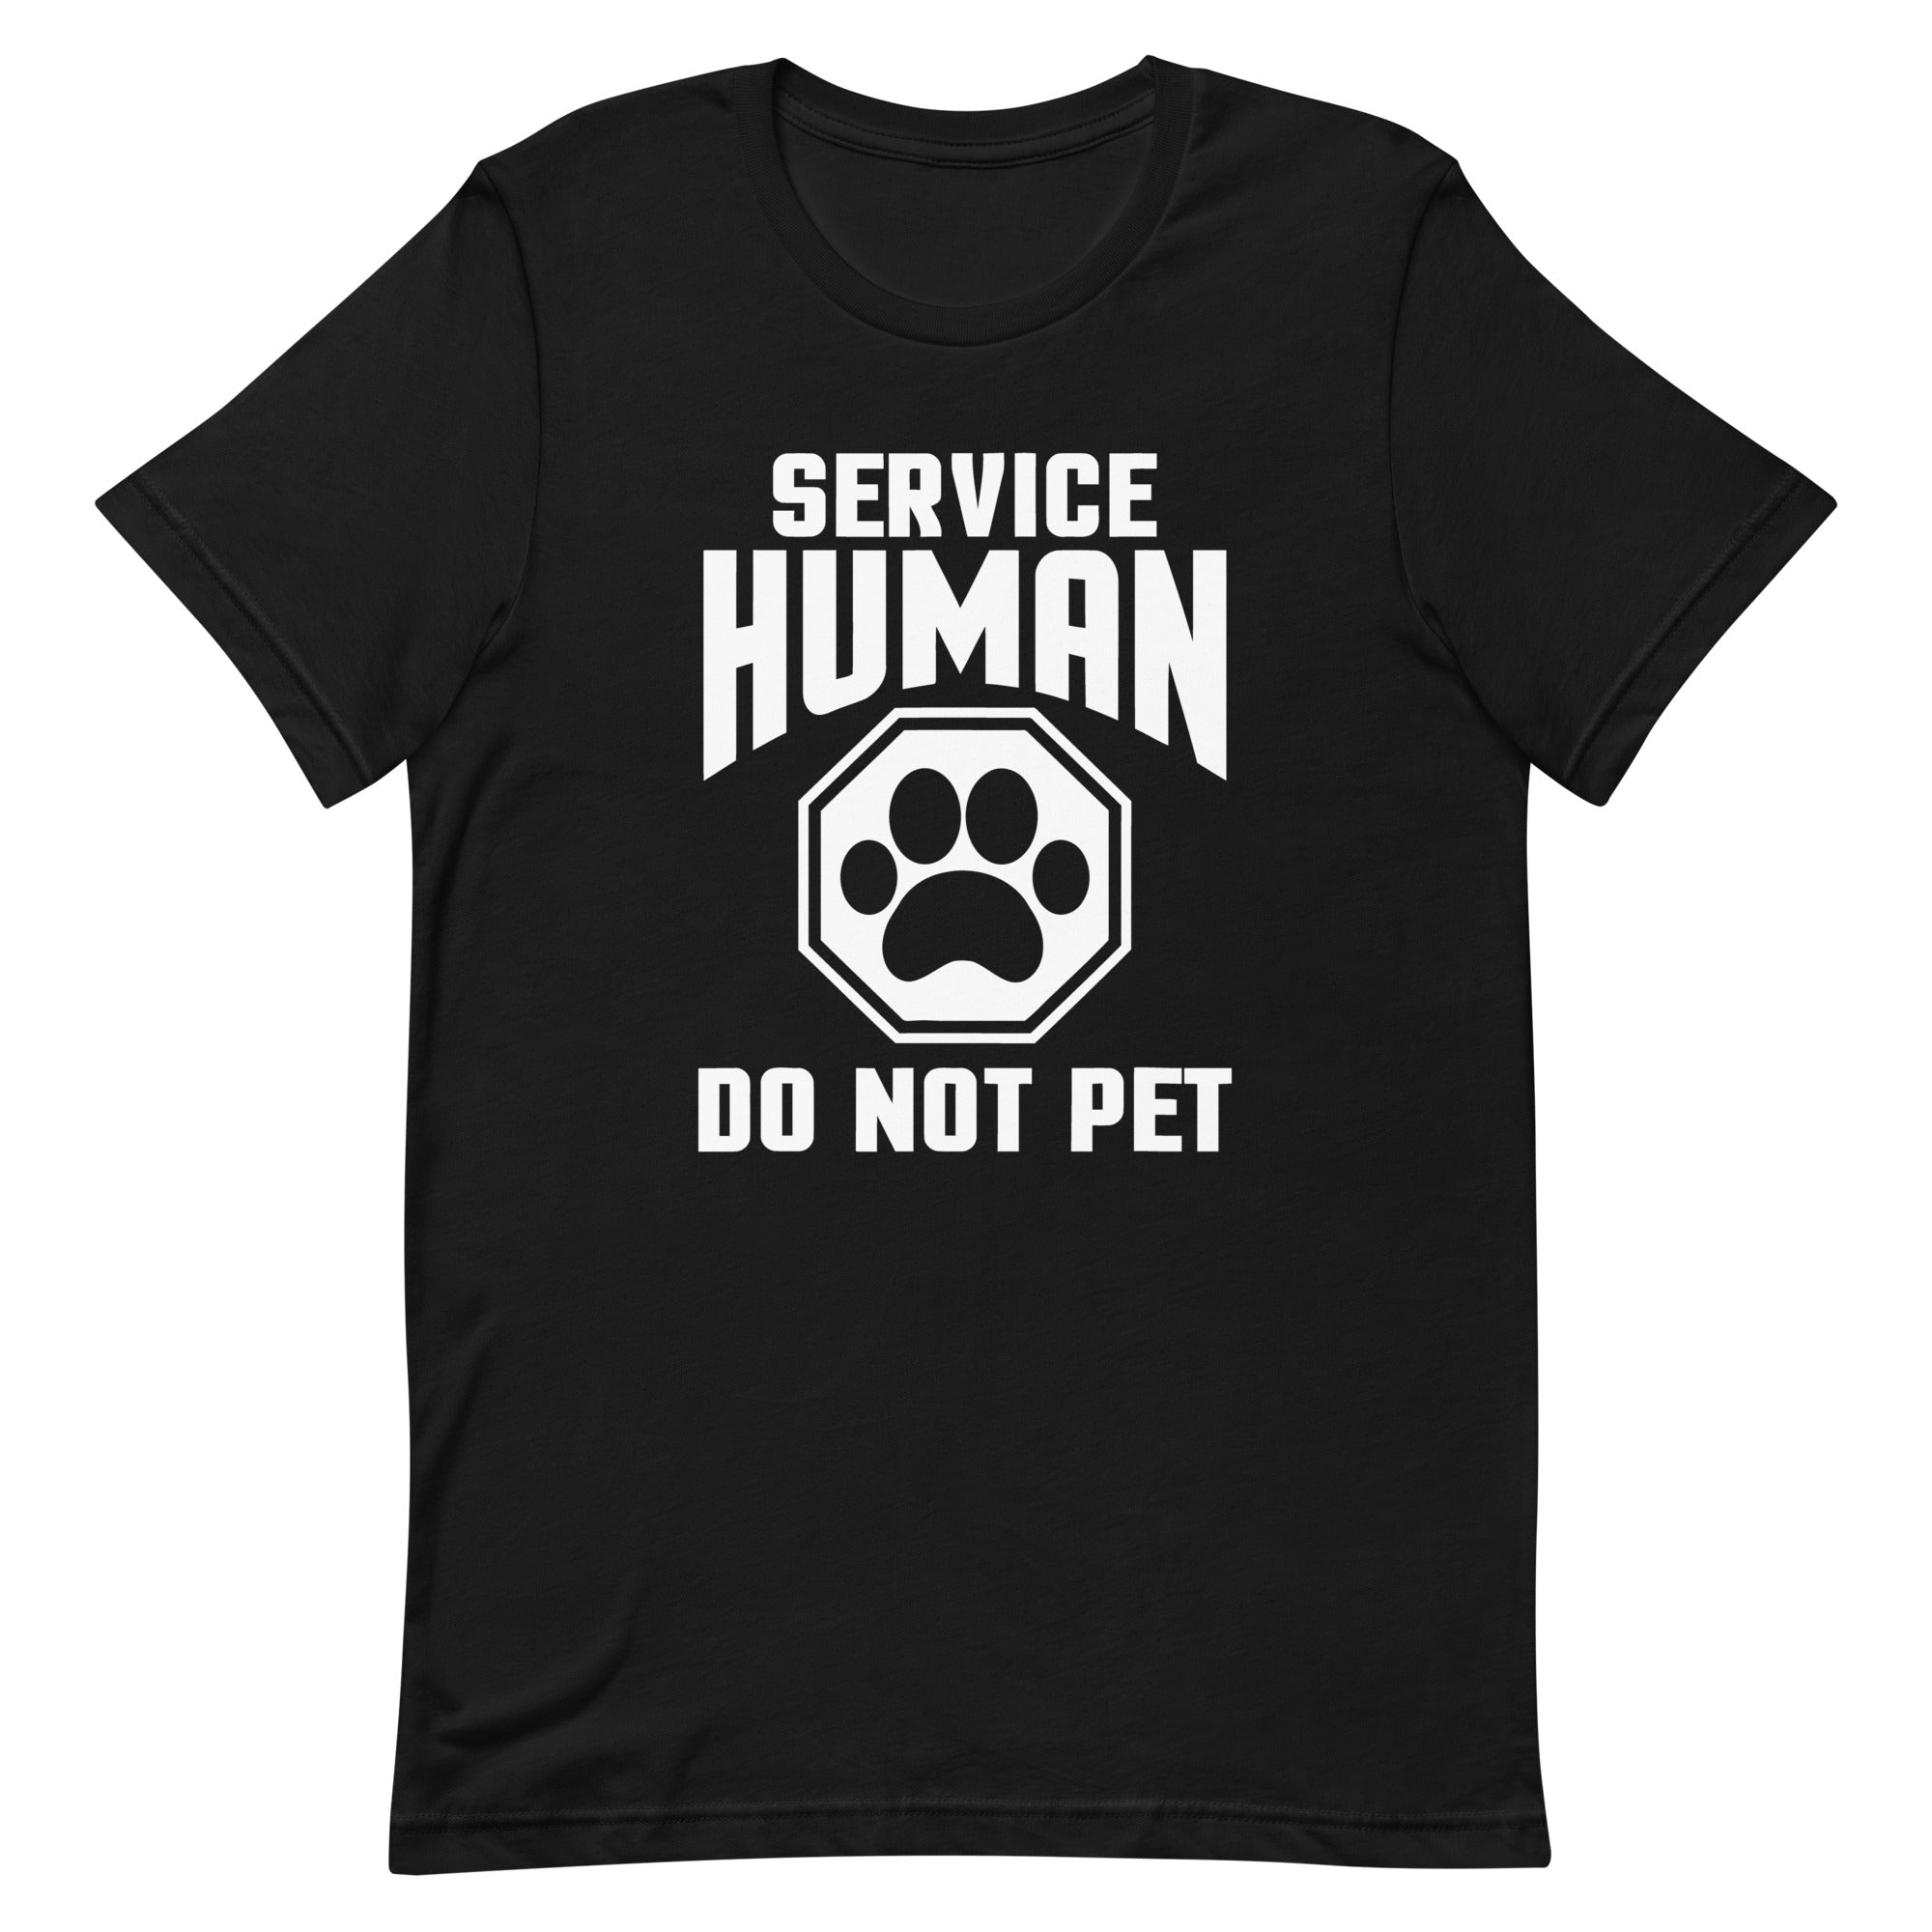 Service Human Tee